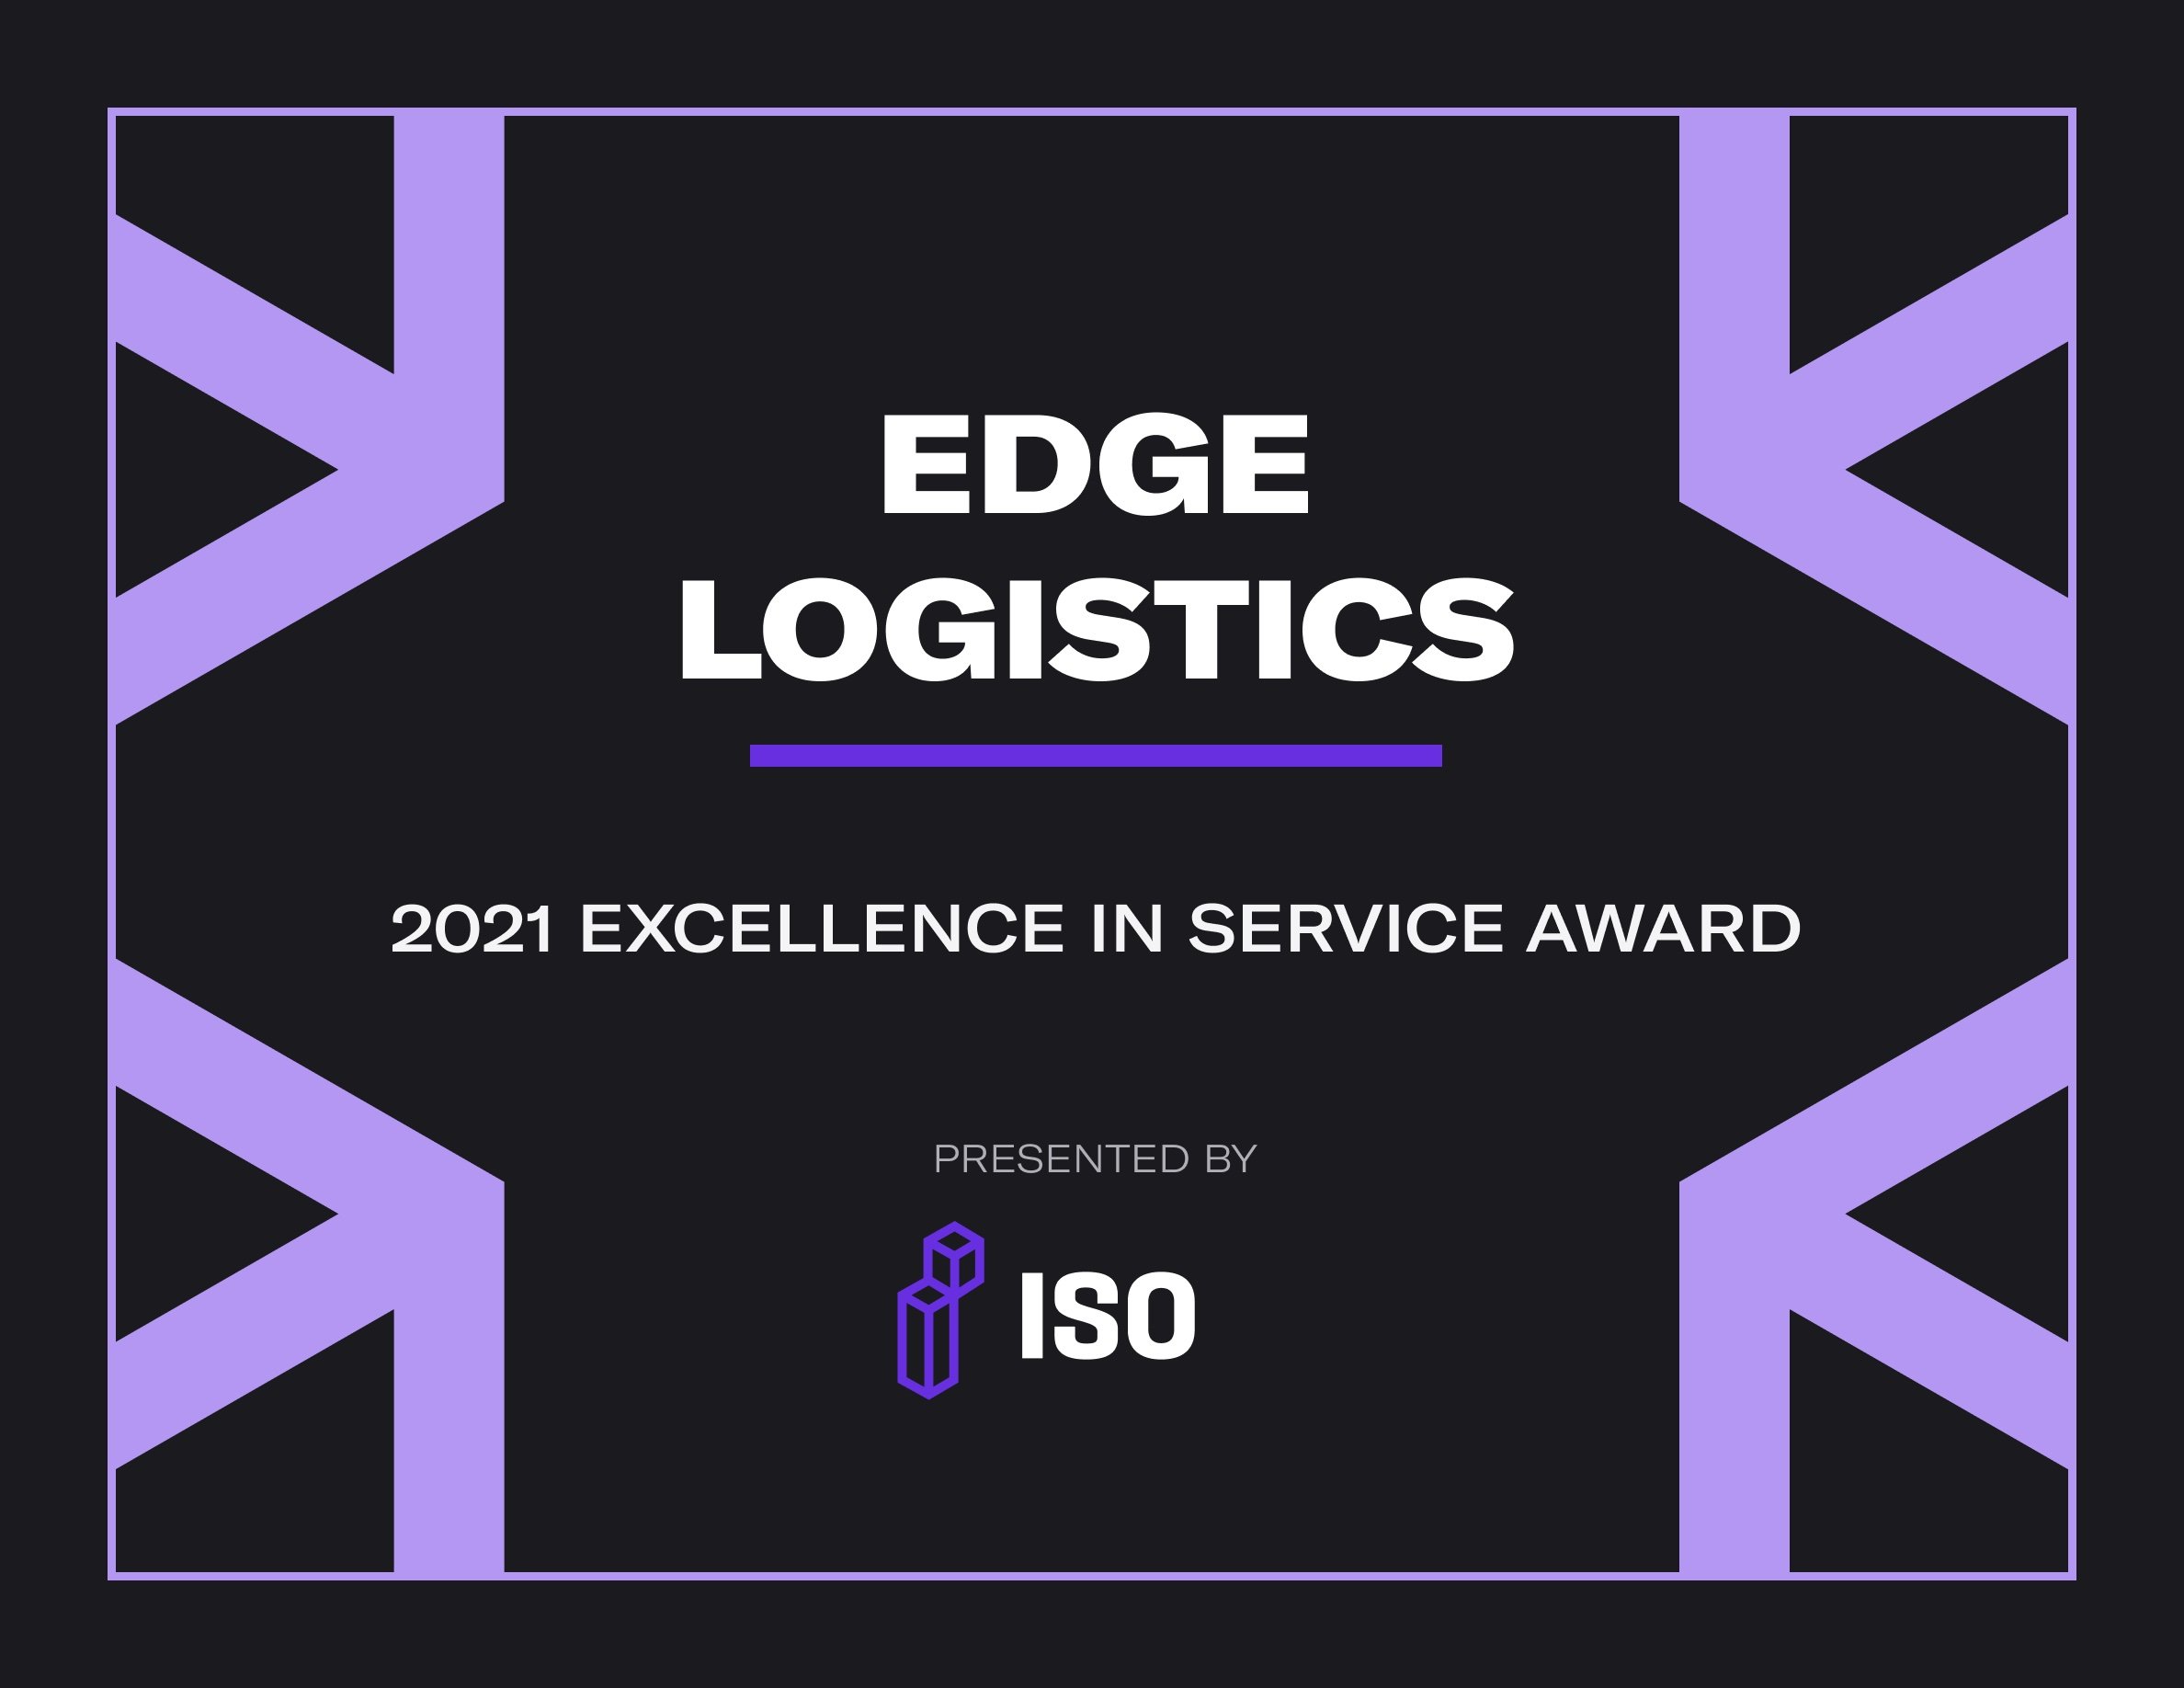 Edge named ISO's 2021 Excellence in Service Award Winner